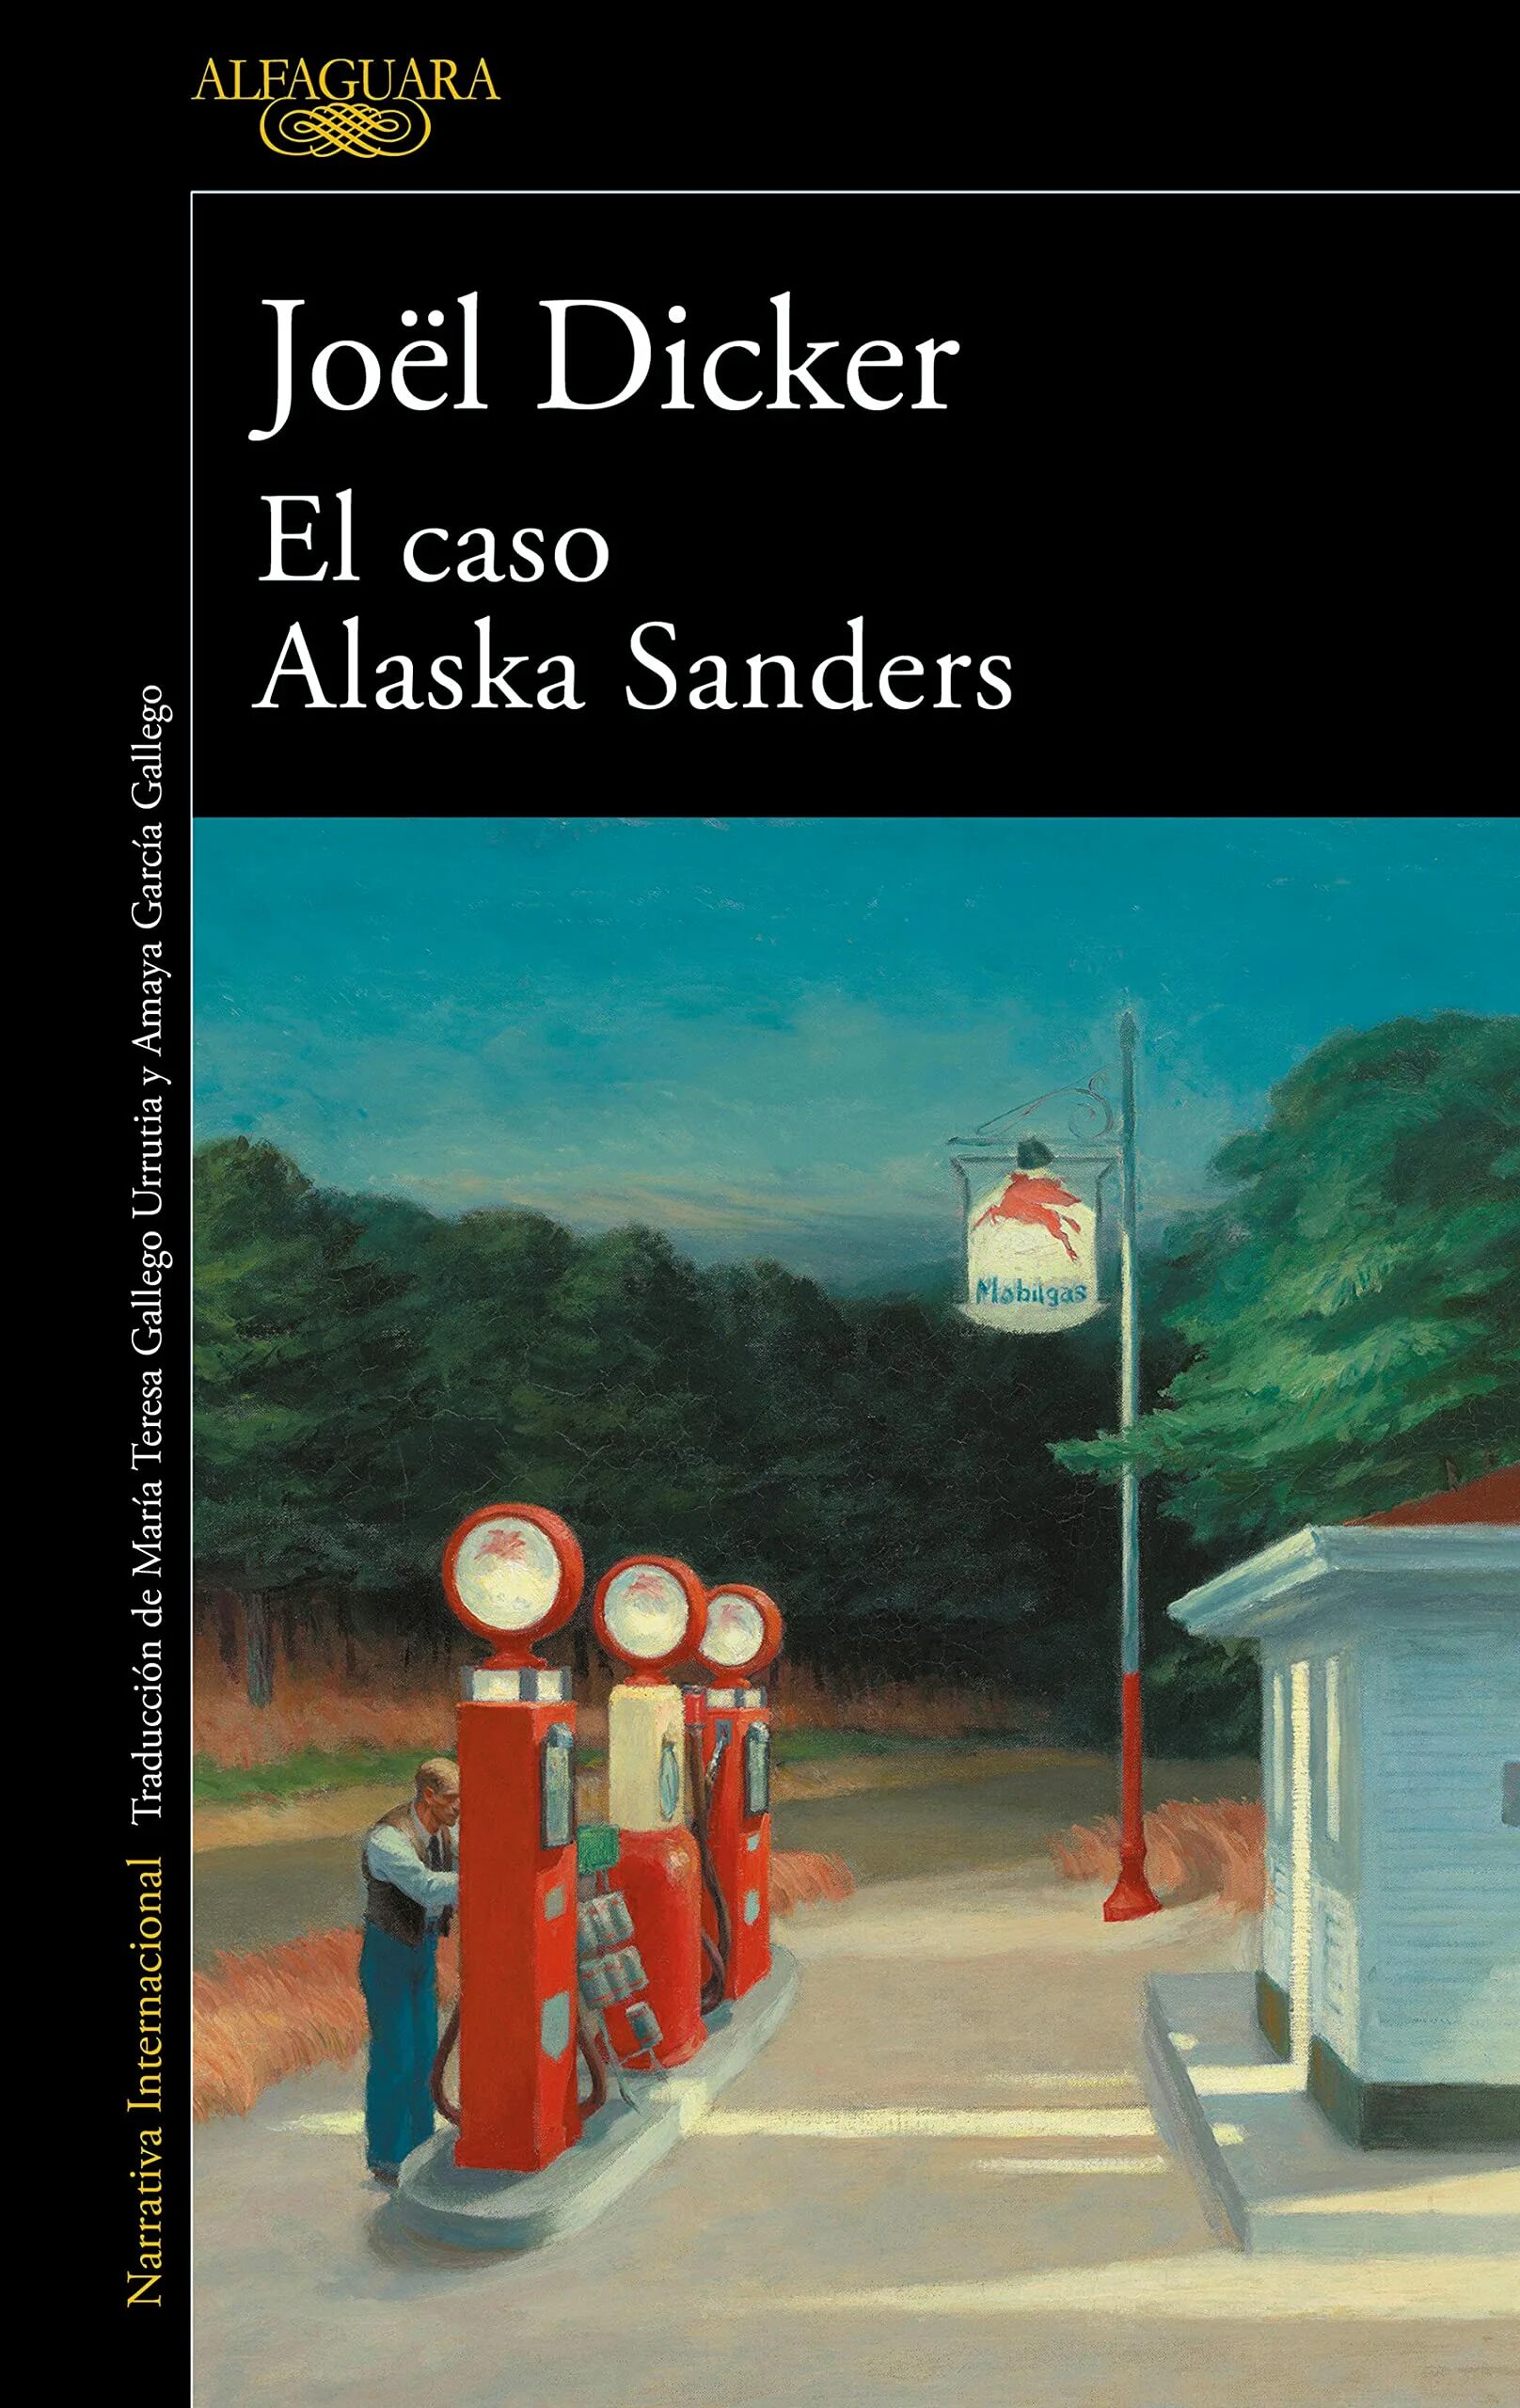 Диккер дело аляска сандерс. Жоэль Диккер Аляска Сандерс. Дело Аляски Сандерс. “The Case of Alaska Sanders” by Joël dicker Cover. “The Case of Alaska Sanders” by Joël dicker.